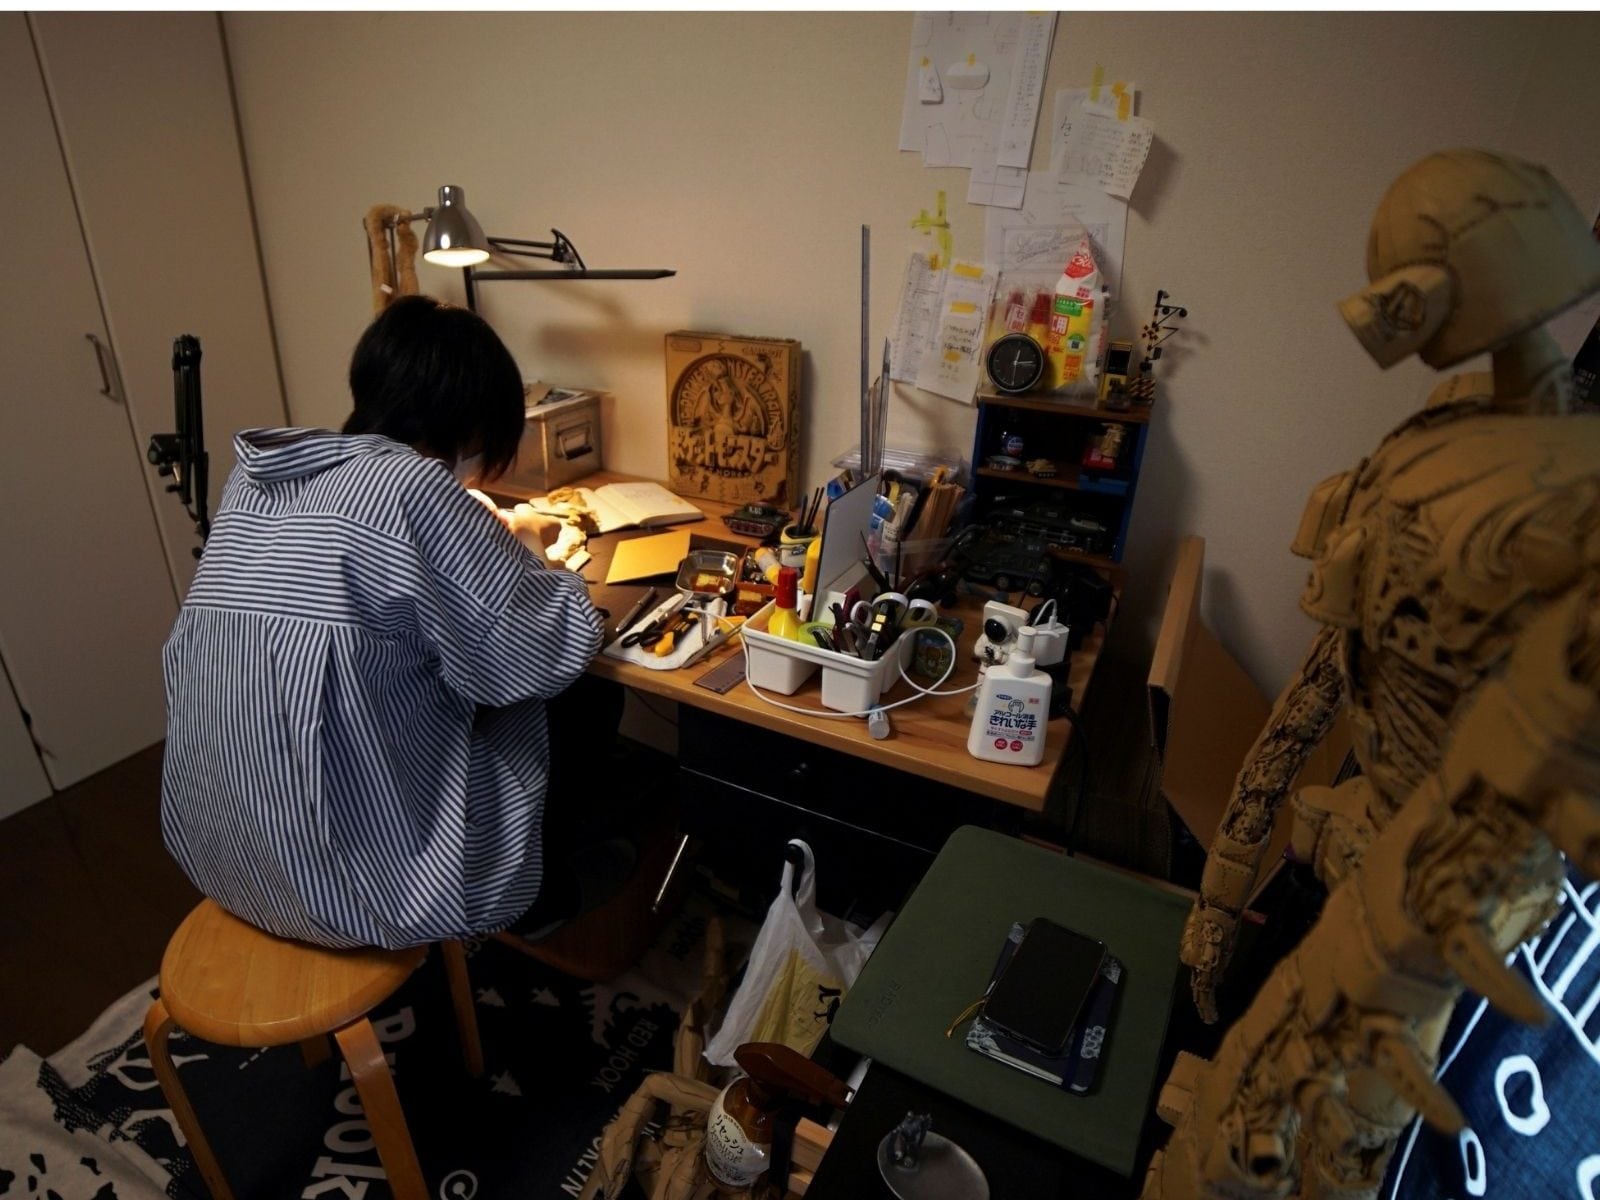 Japanese artist makes life-like cardboard sculptures